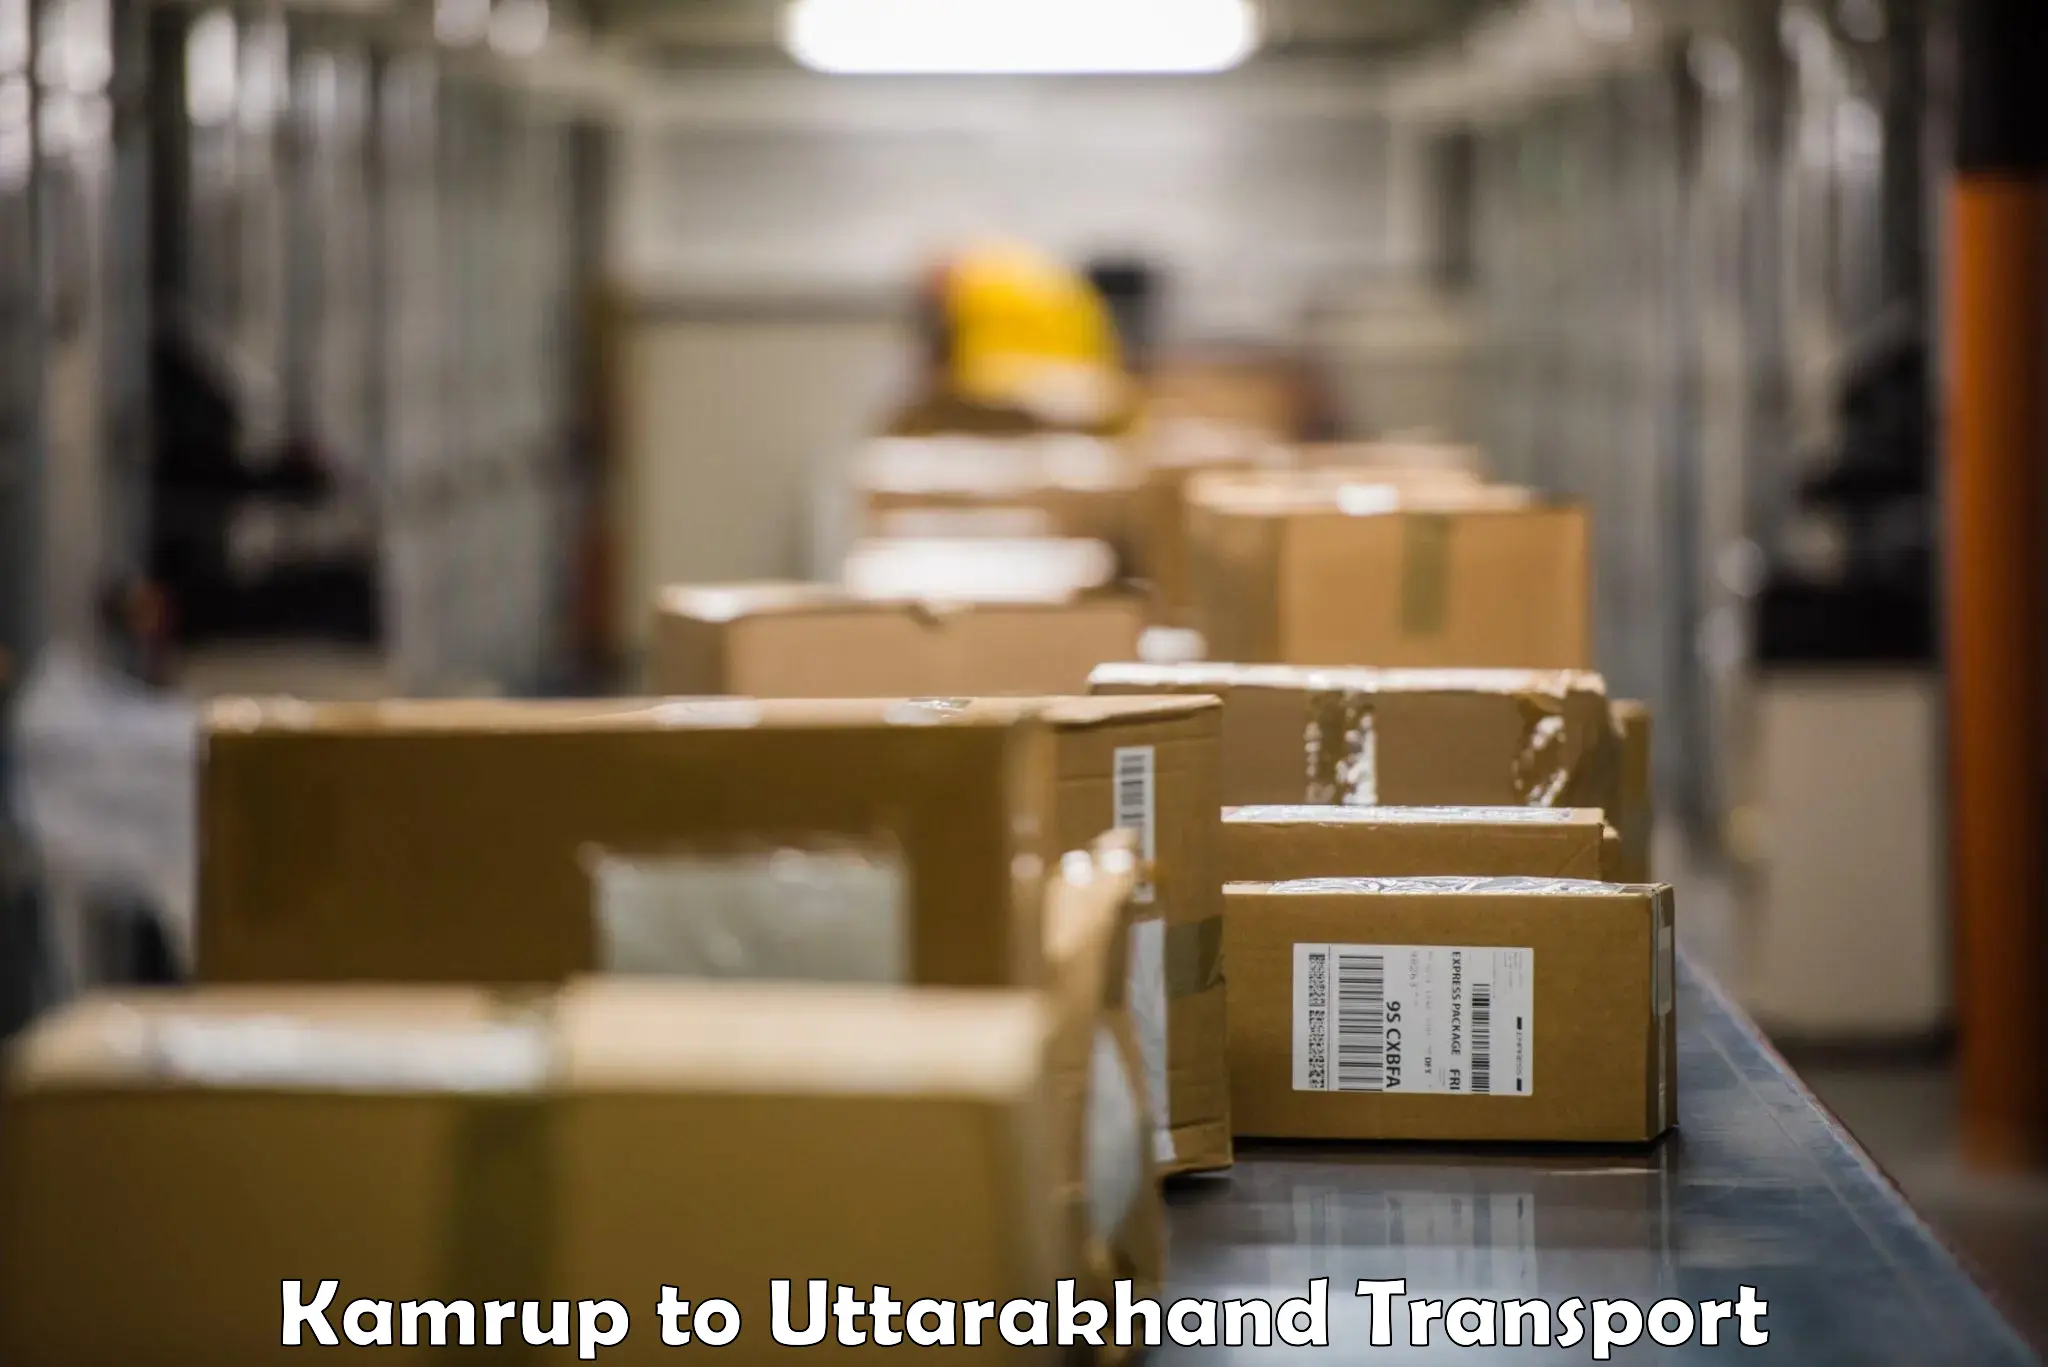 Delivery service Kamrup to Dehradun